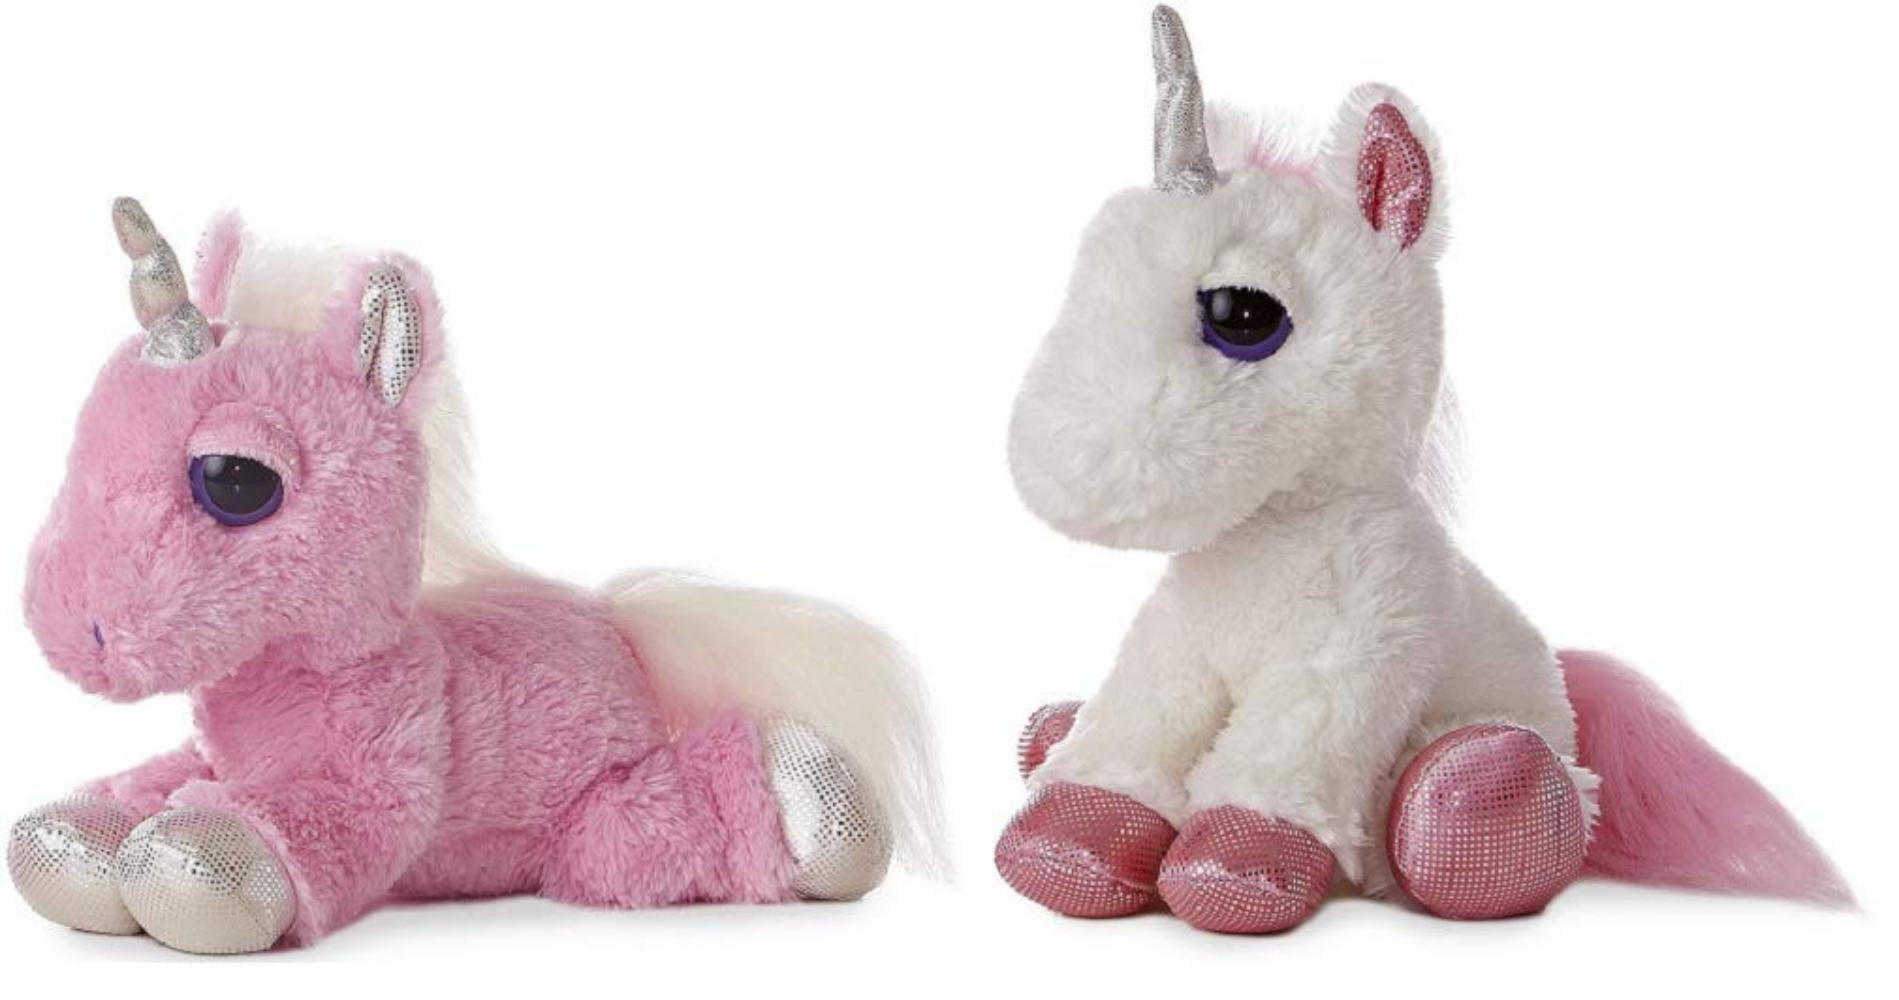 Heavenly Unicorn Sparkle Big Eye 7" Soft Plush Stuffed Animal Toy Doll For Kids 